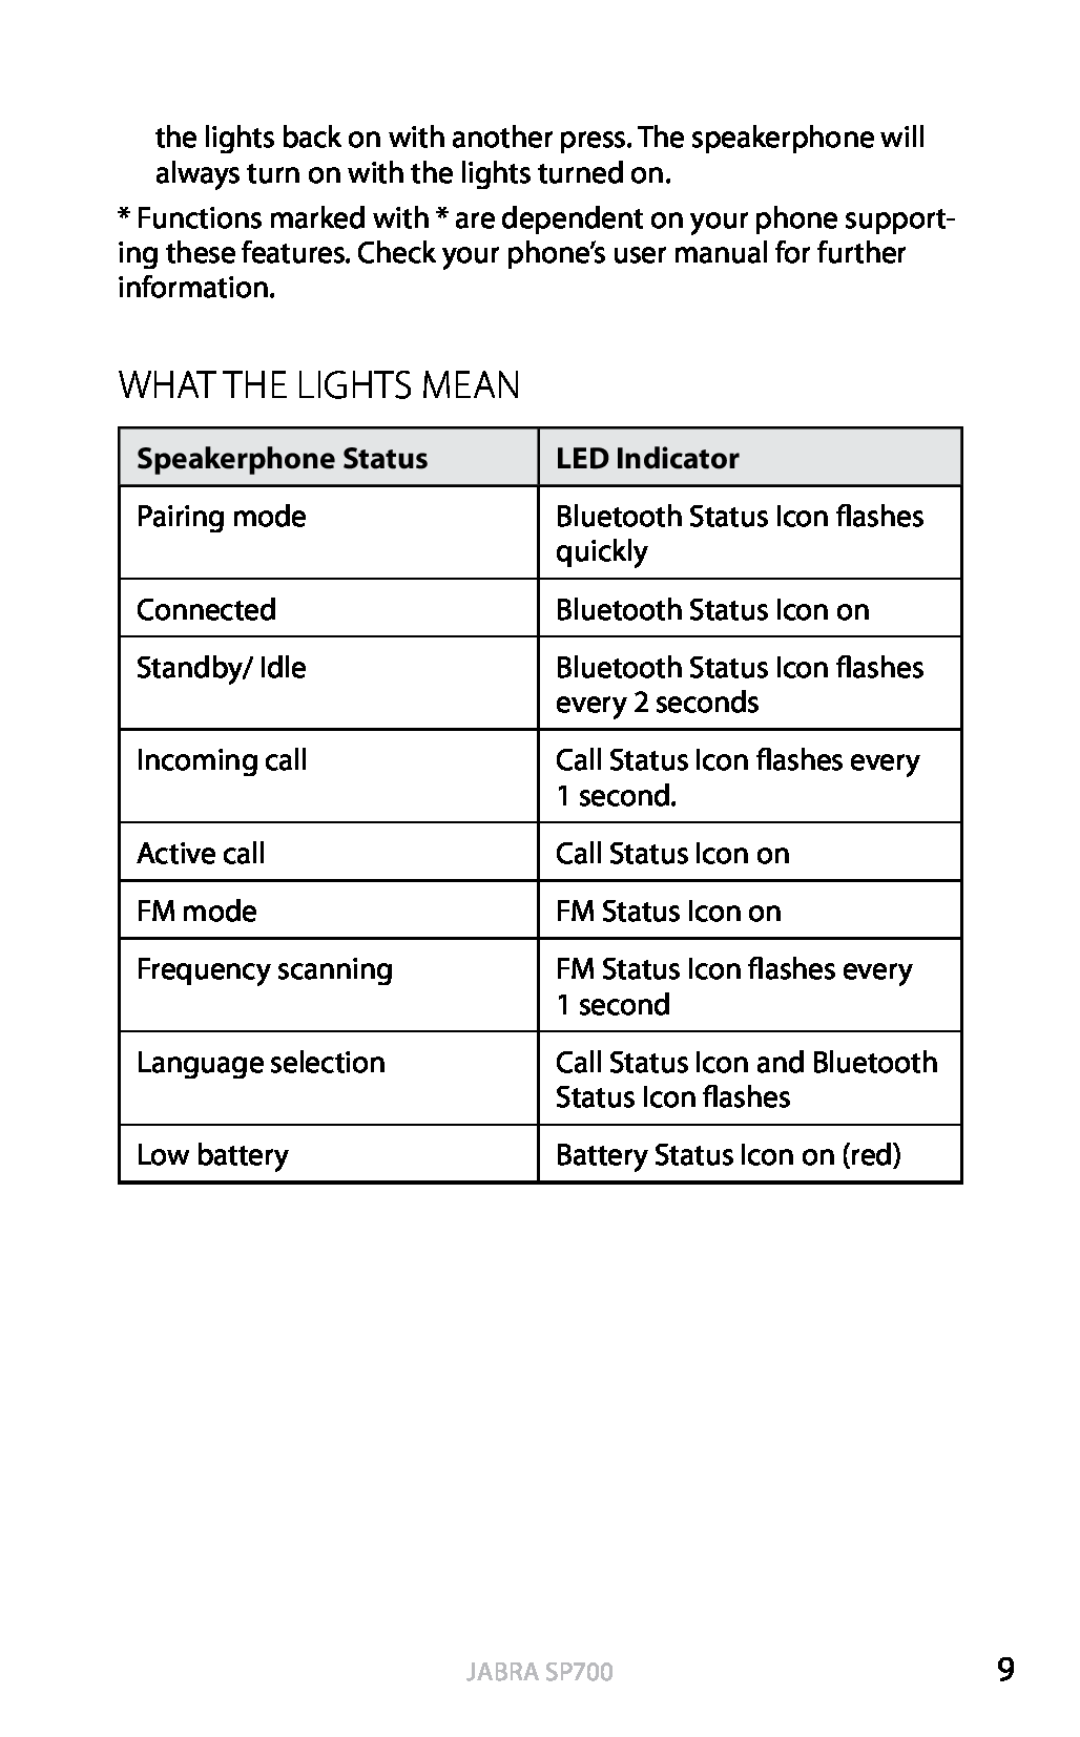 Jabra SP700 user manual What the lights mean, Speakerphone Status, LED Indicator, english 